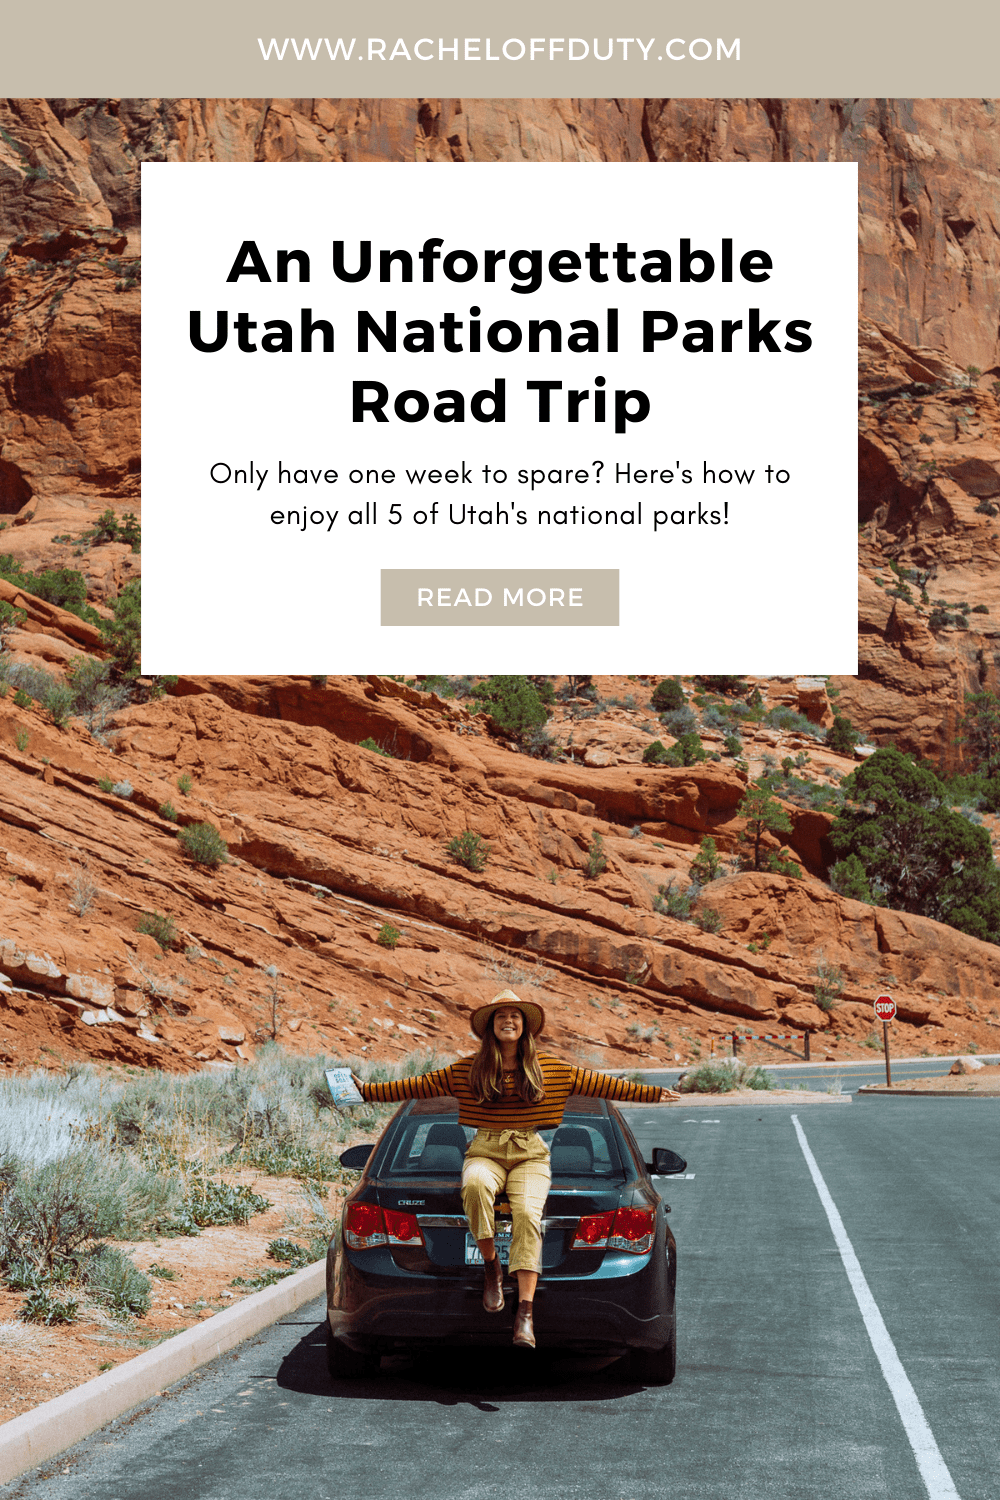 Rachel Off Duty: An Unforgettable Utah National Parks Road Trip